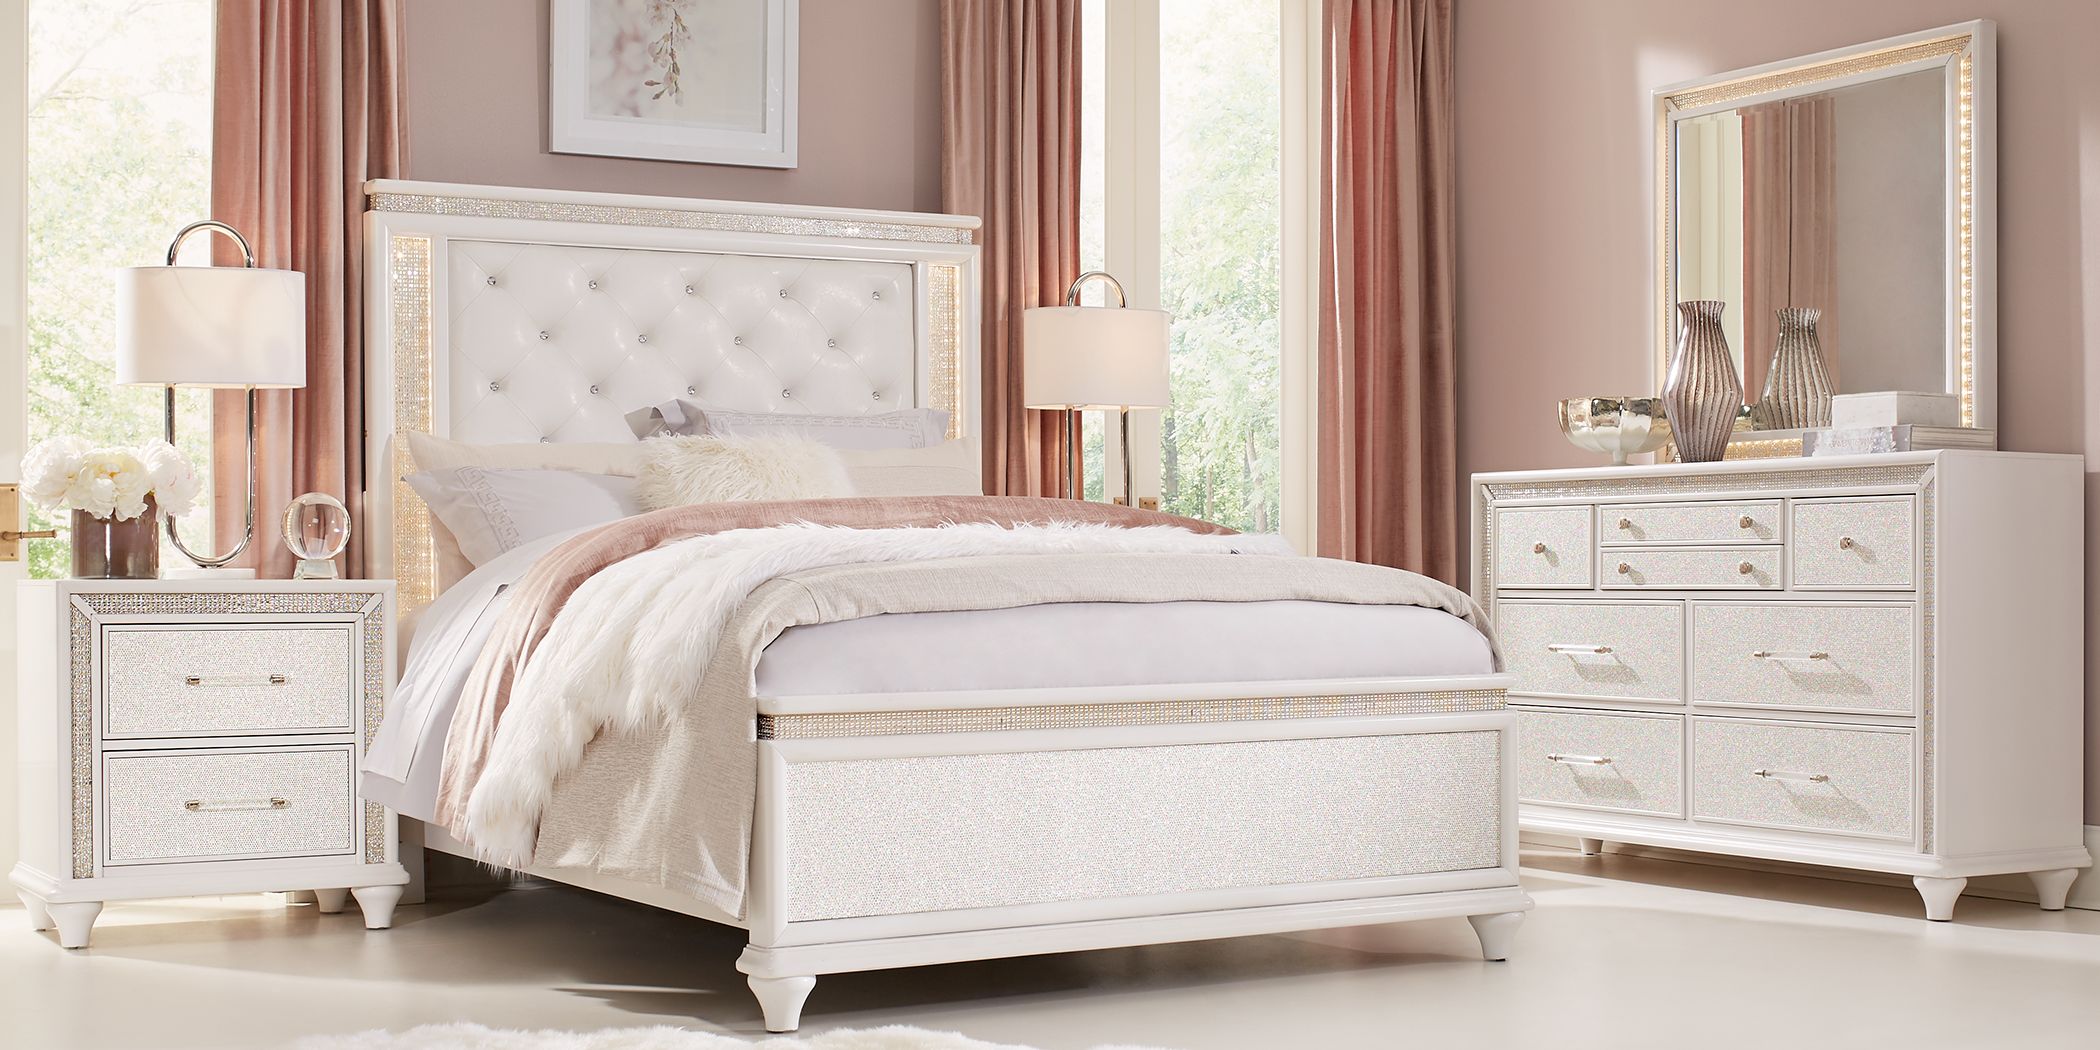 sofia vergara white bedroom furniture